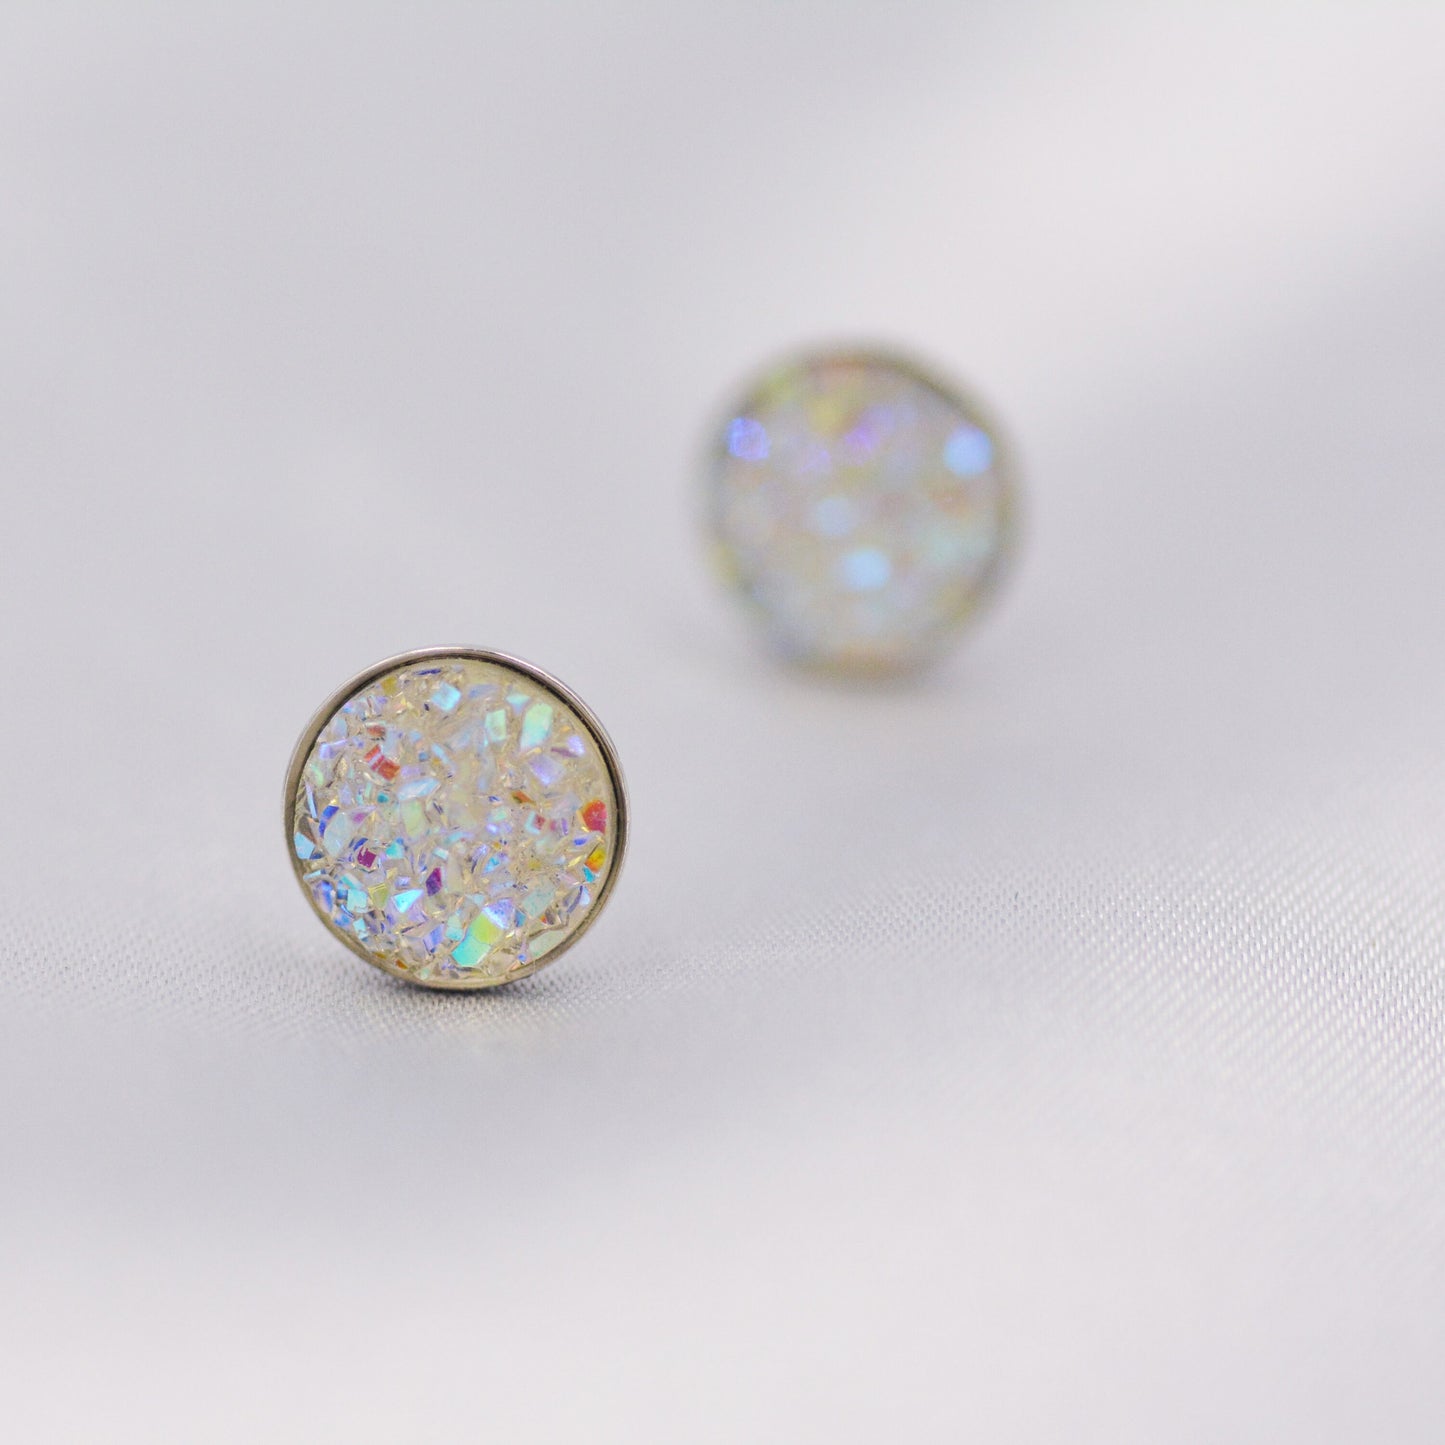 Sterling Silver Druzy Stud Earrings? 8mm Coin Earrings, Sparkly and Pretty - White Druzy, Opal Druzy Earrings